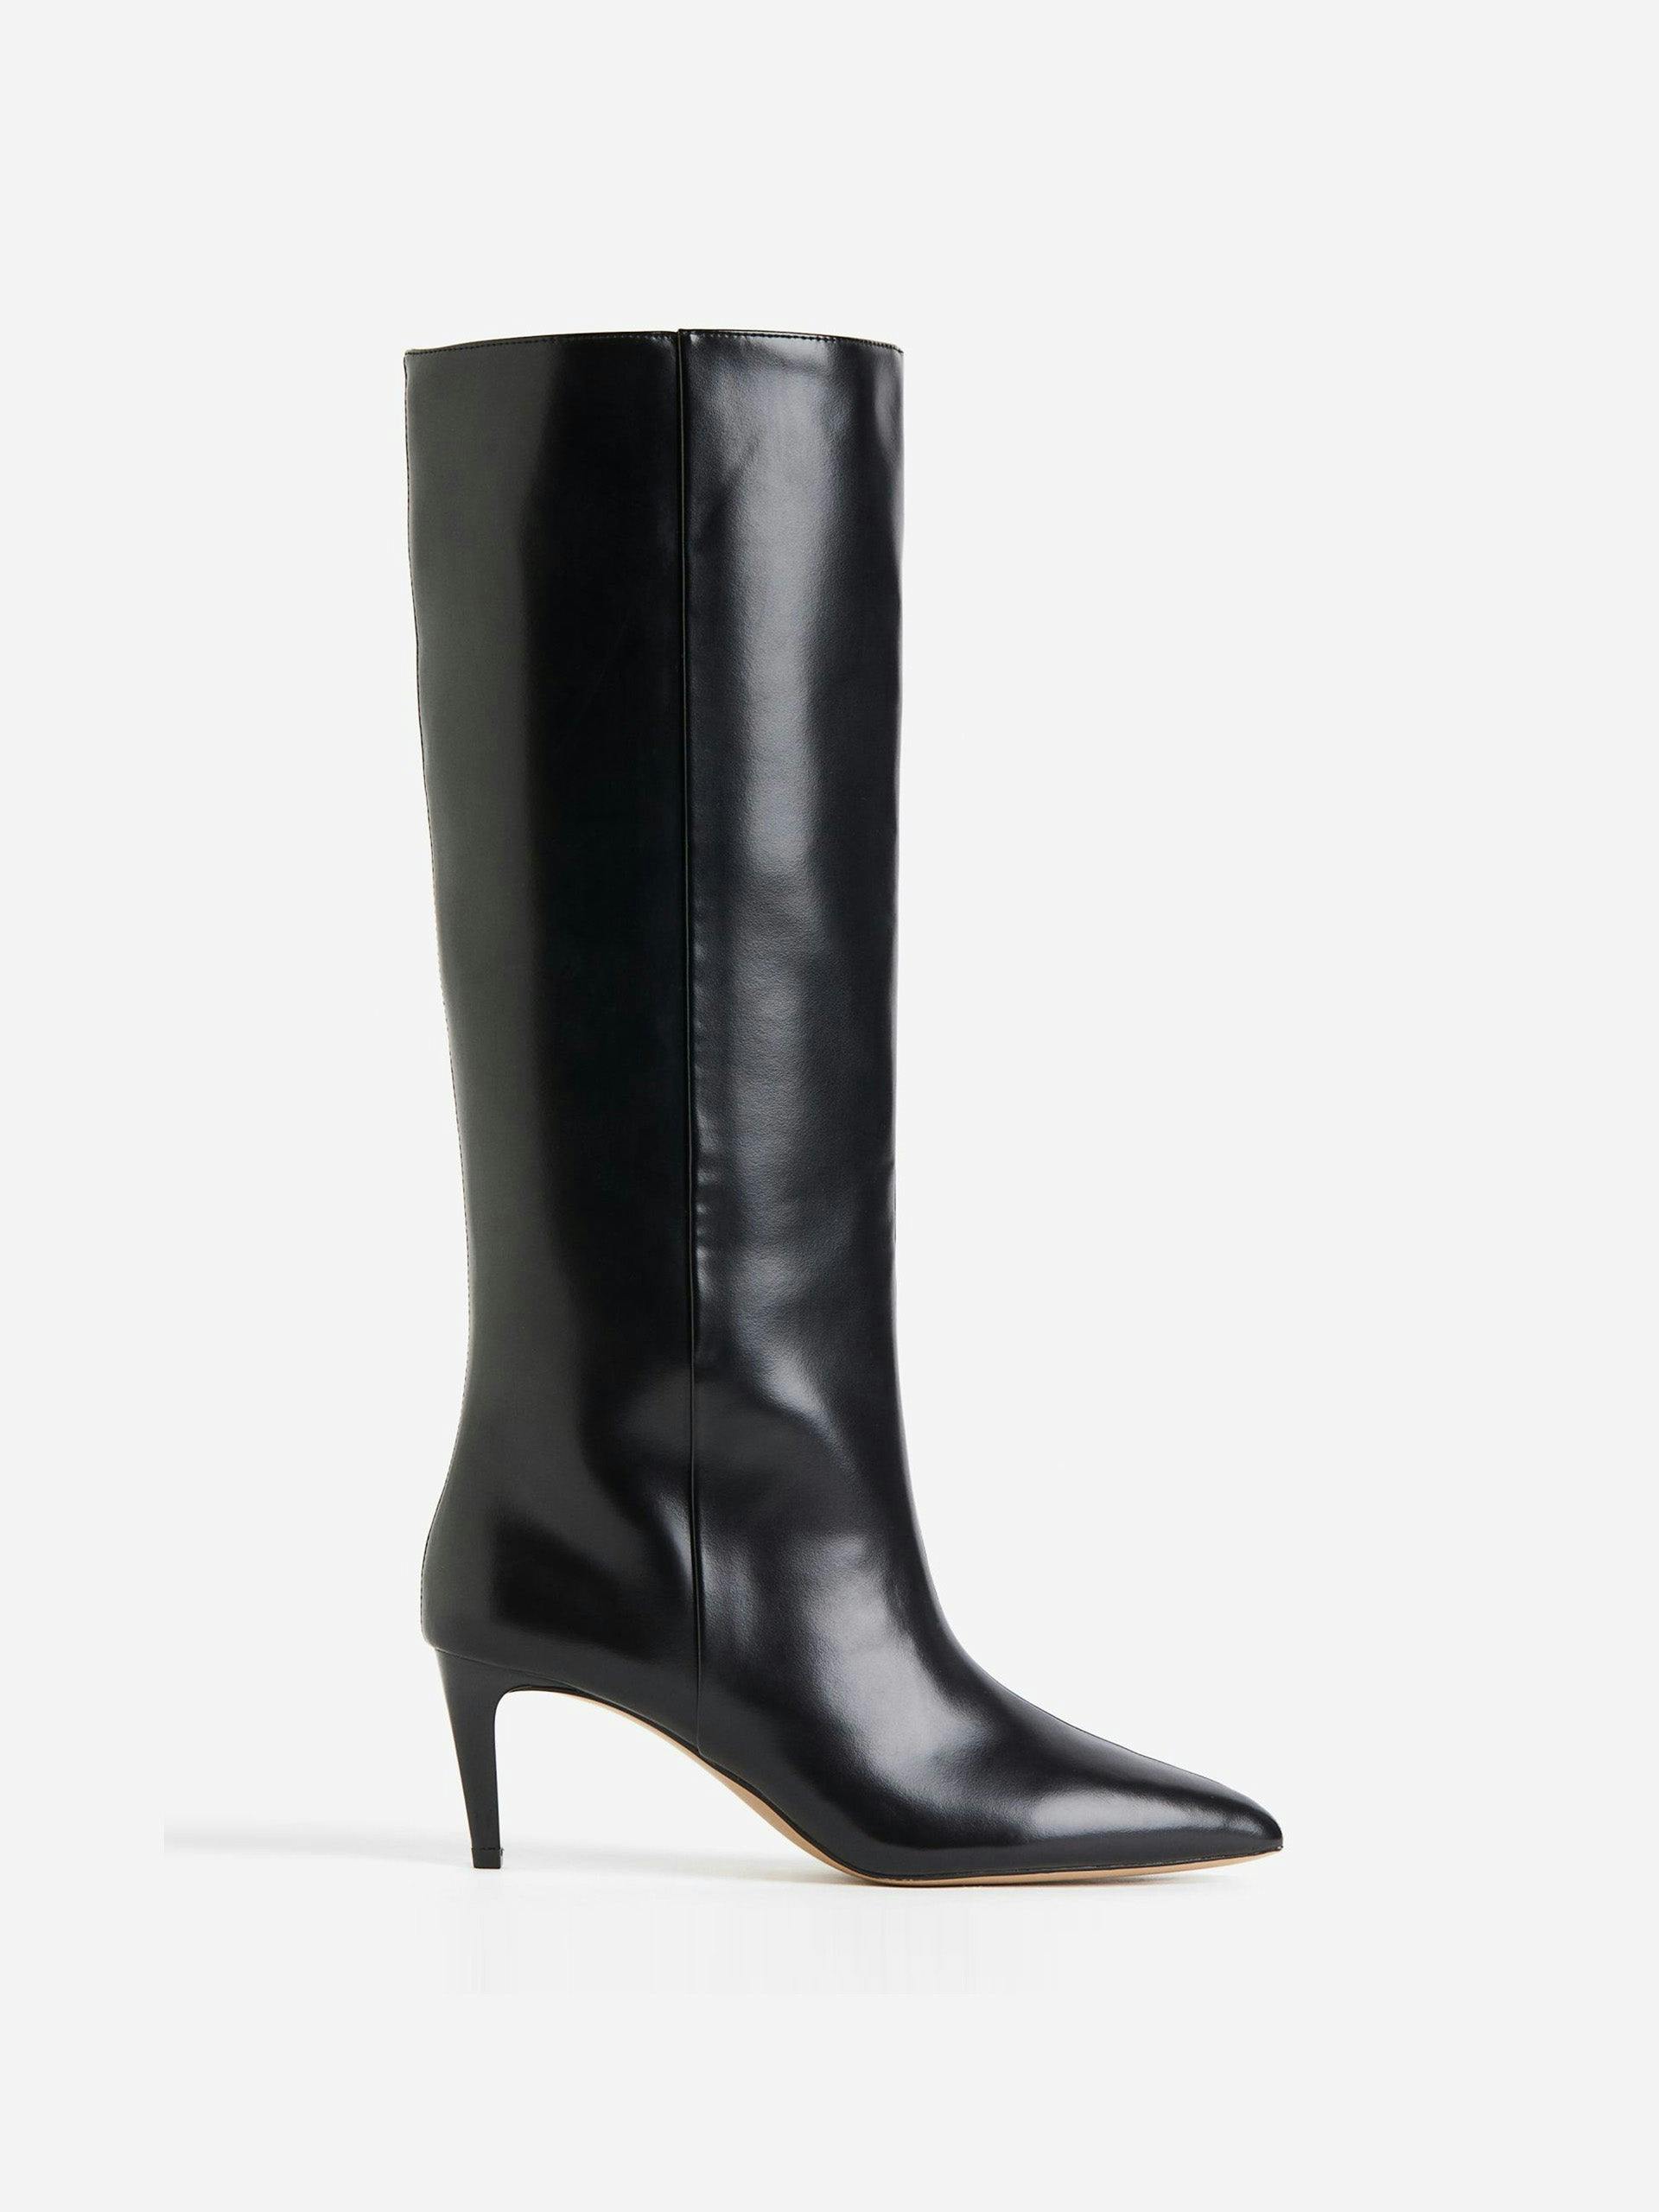 Knee-high heeled black boots